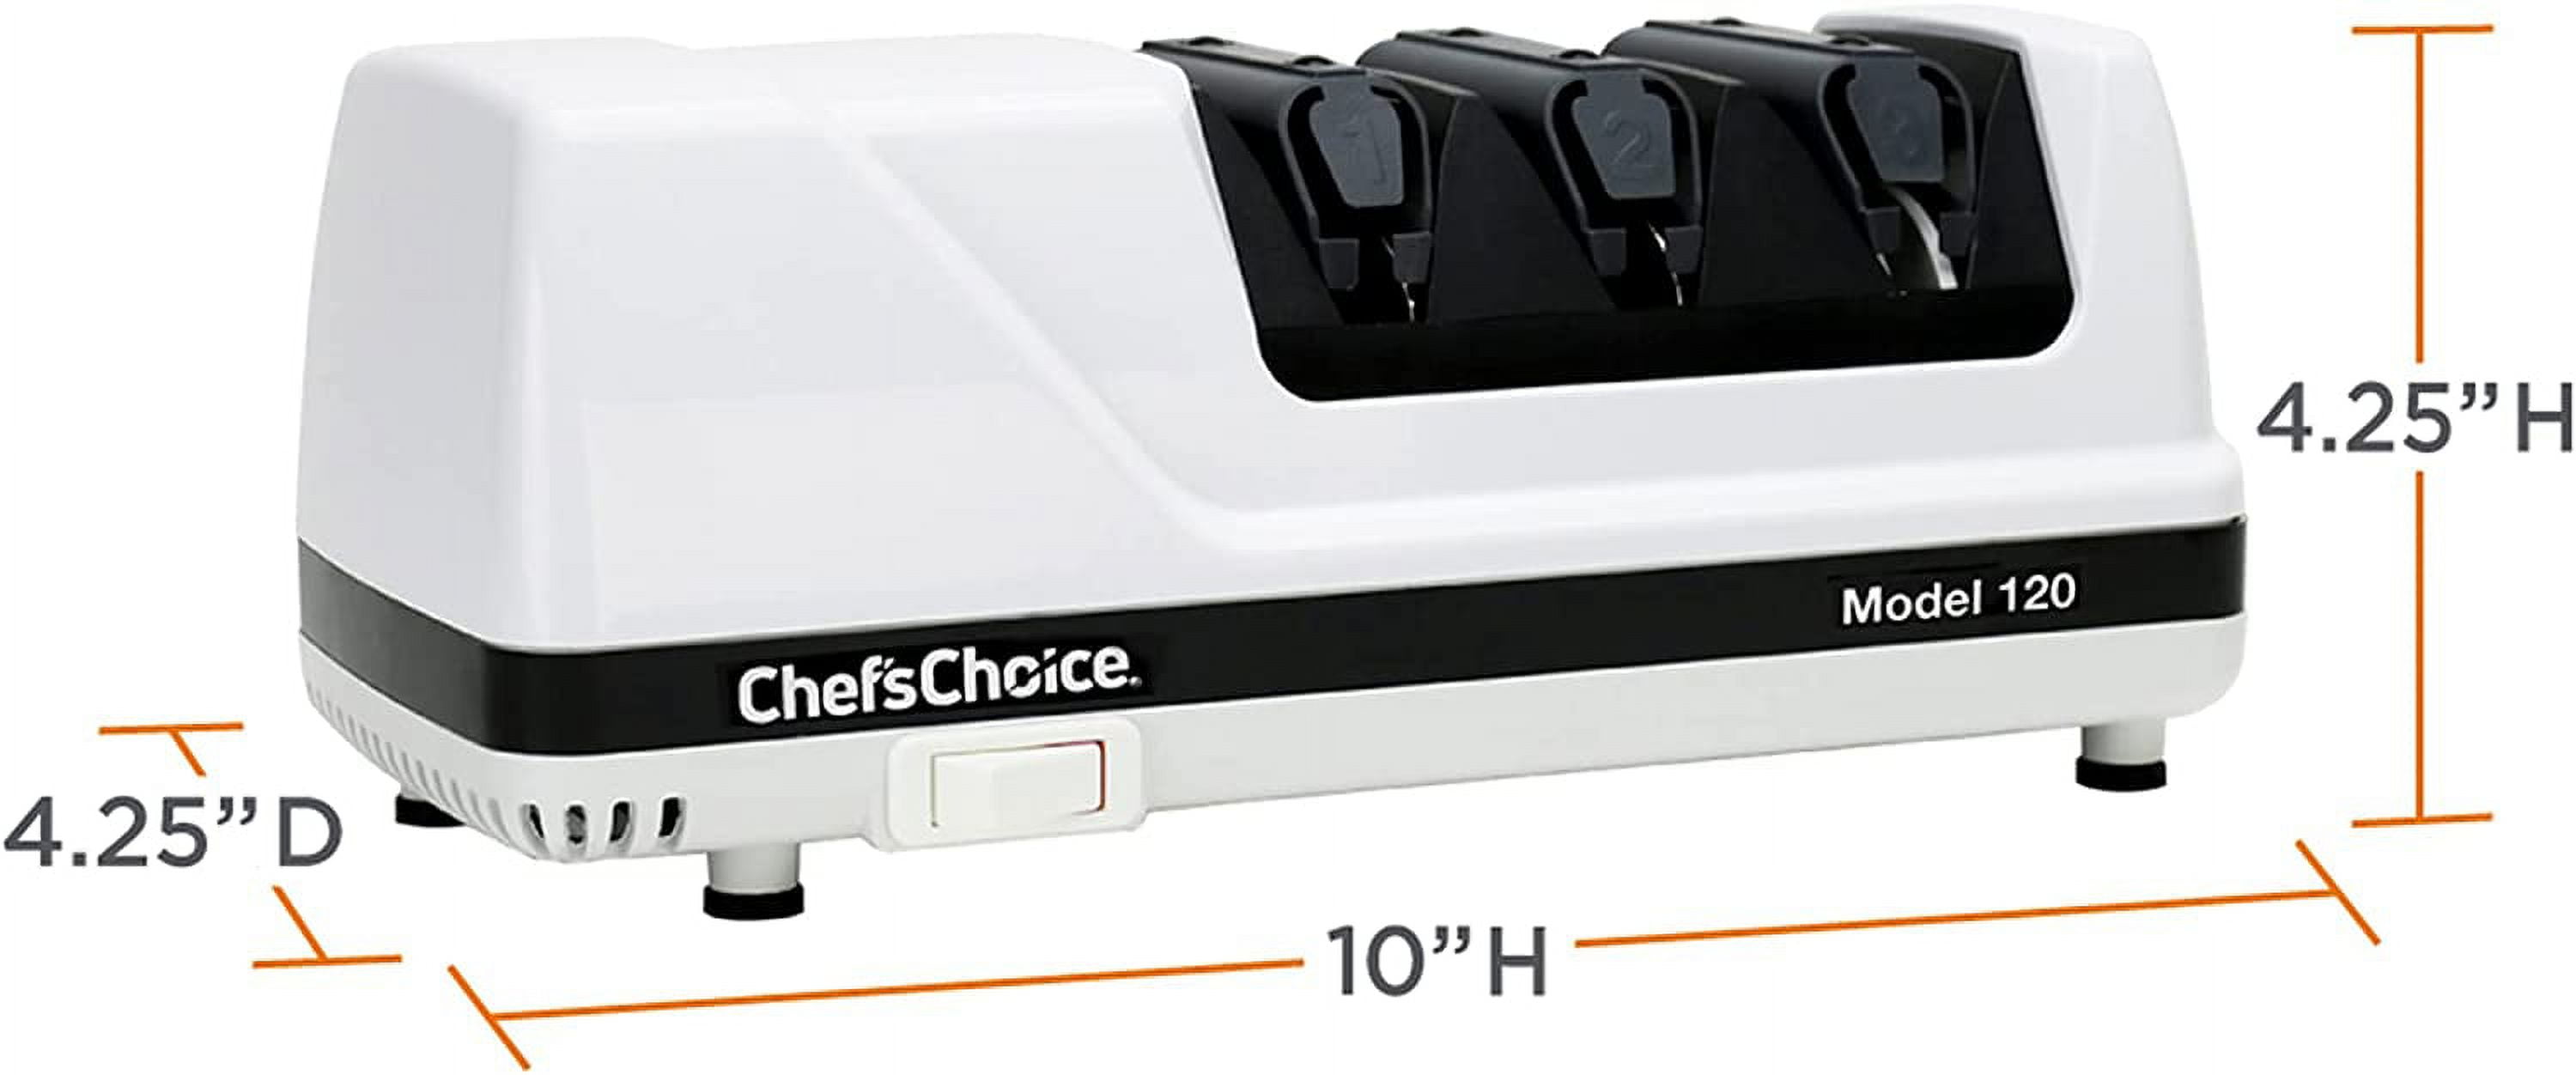 Chef'Choice - CC2000 Knife Sharpener  Advantageously shopping at